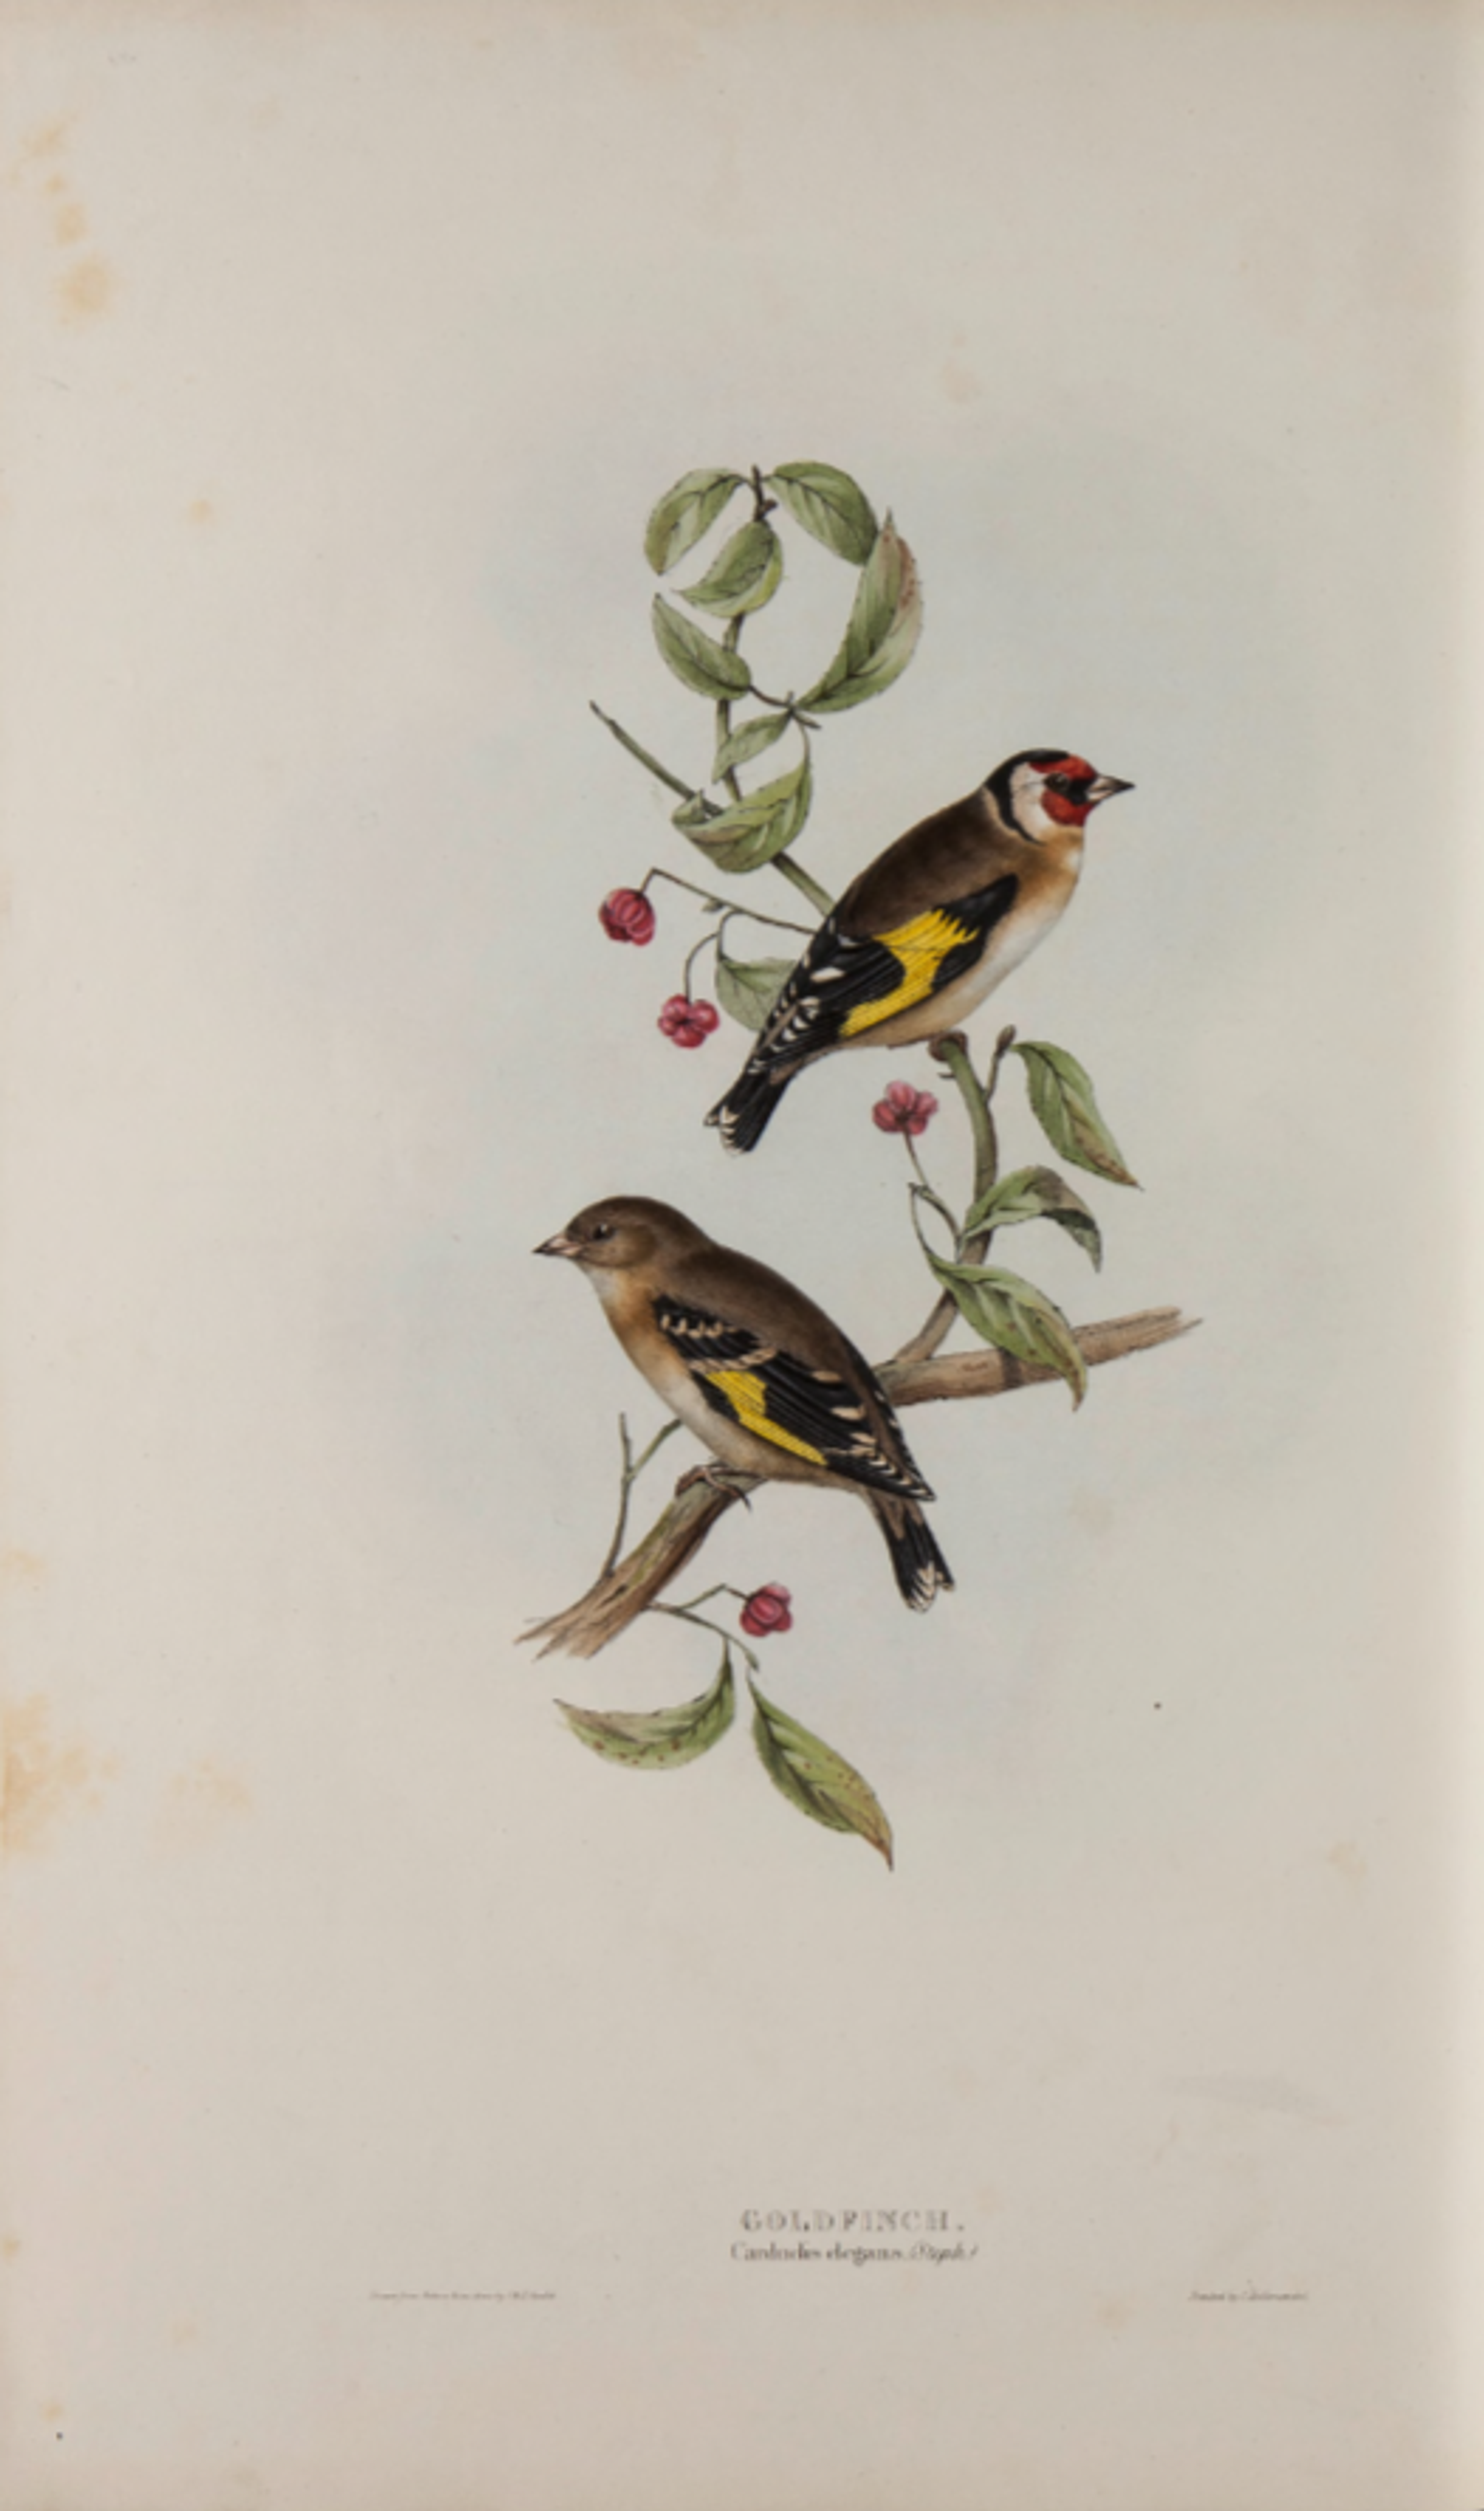 Elizabeth Gould, Putter in 'The Birds of Europe', 1837.